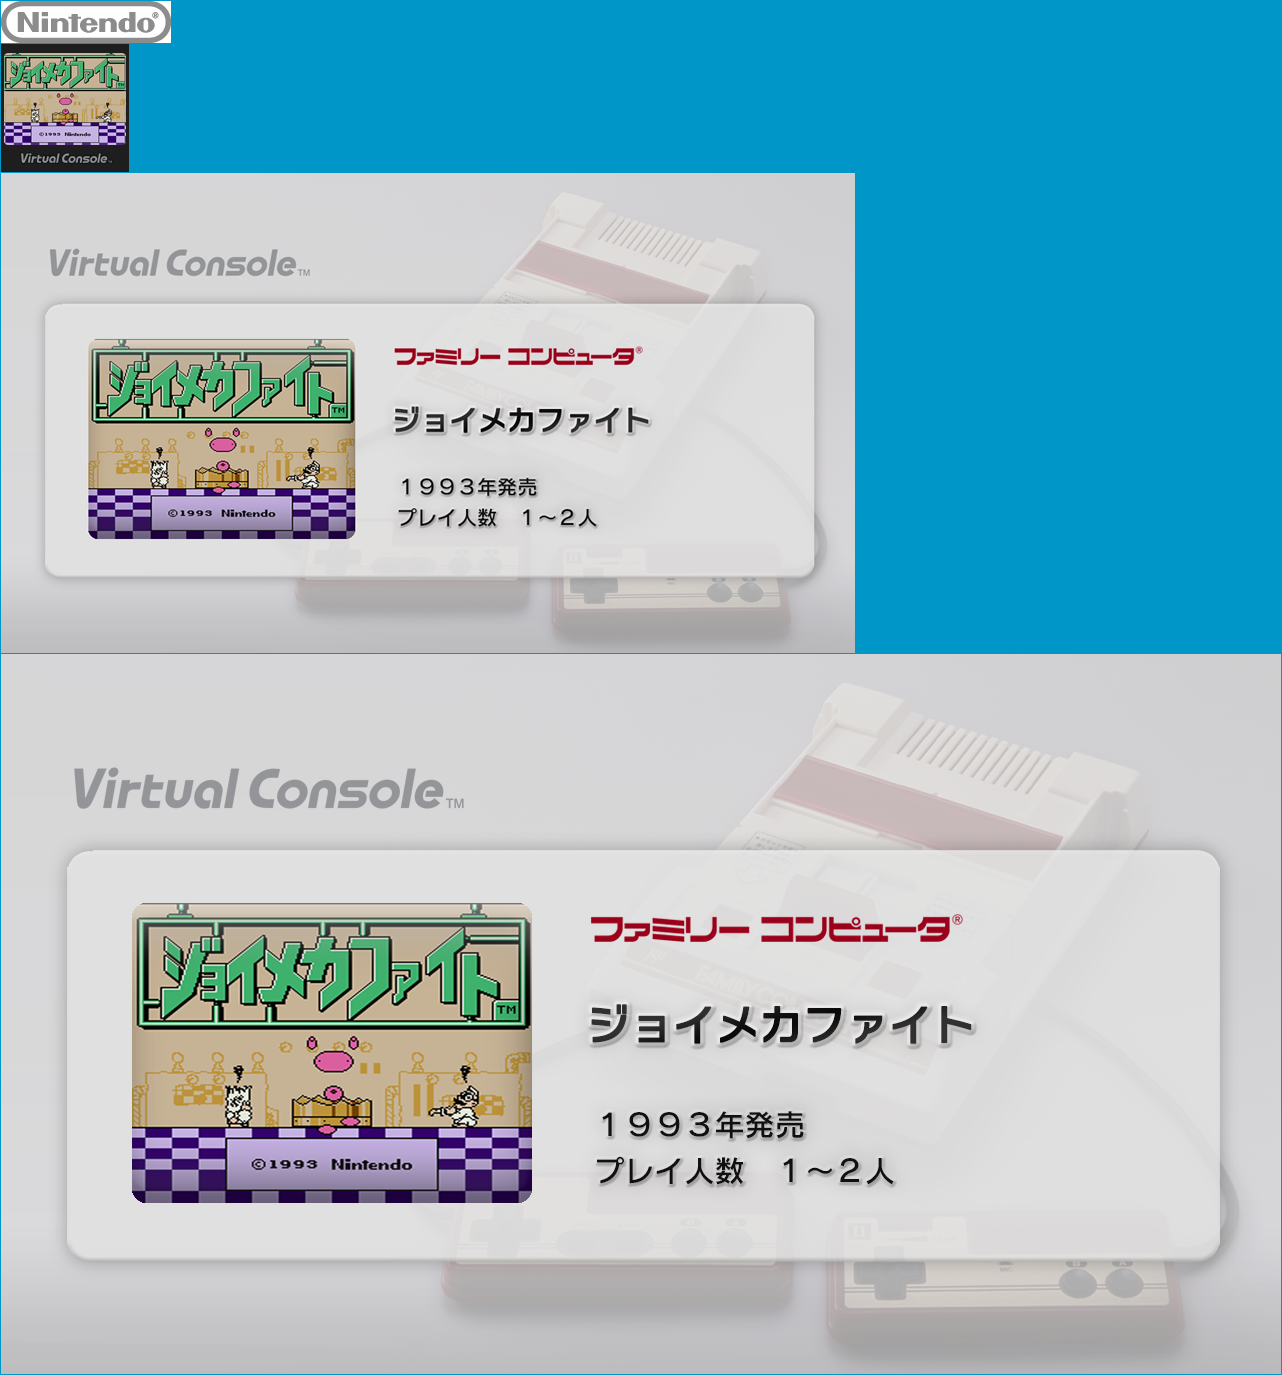 Virtual Console - Joy Mech Fight